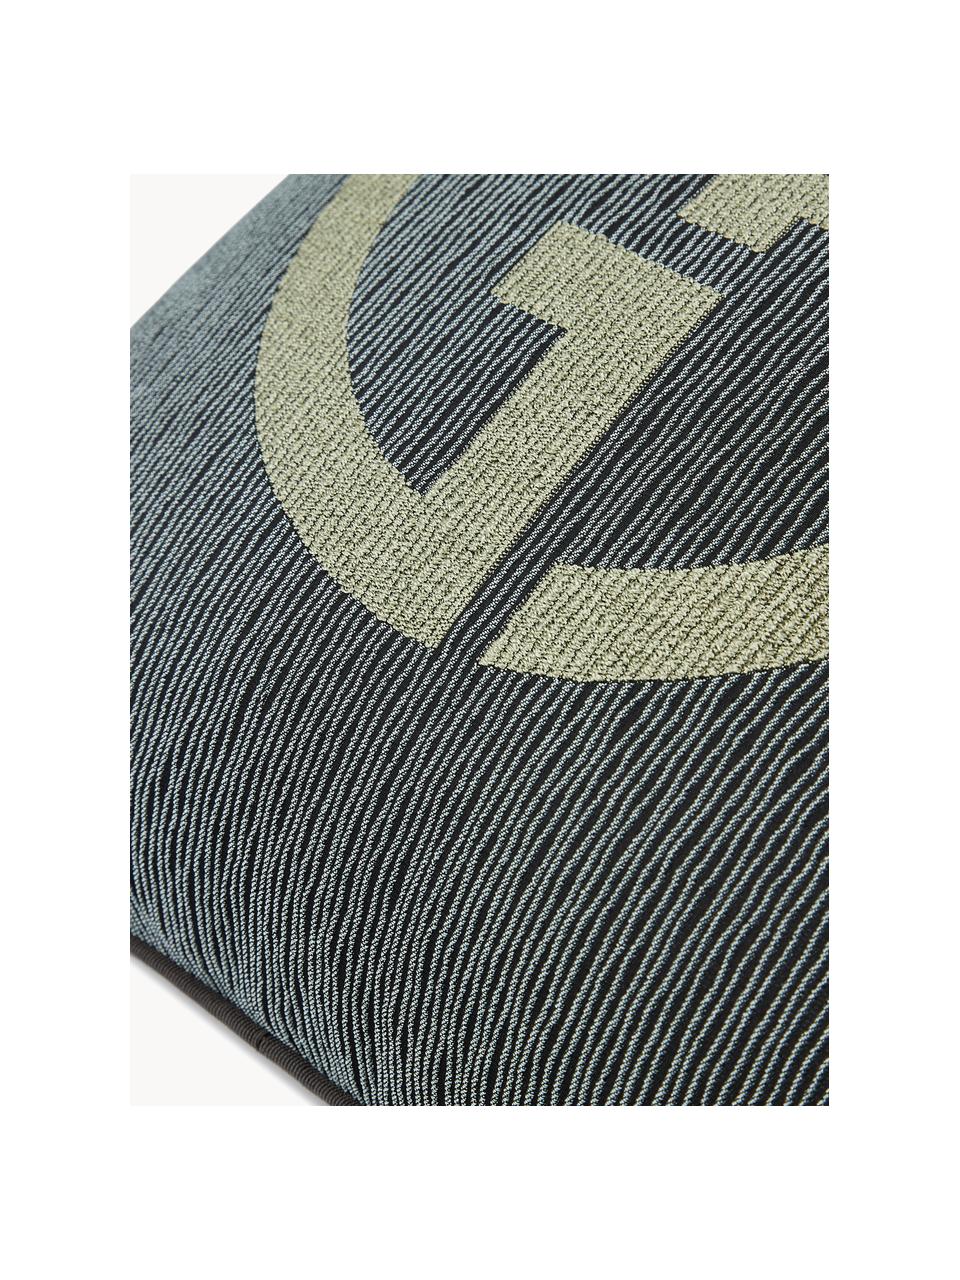 Sierkussen Janette met Giorgio Armani-logo, Antraciet, olijfgroen, B 40 x L 40 cm